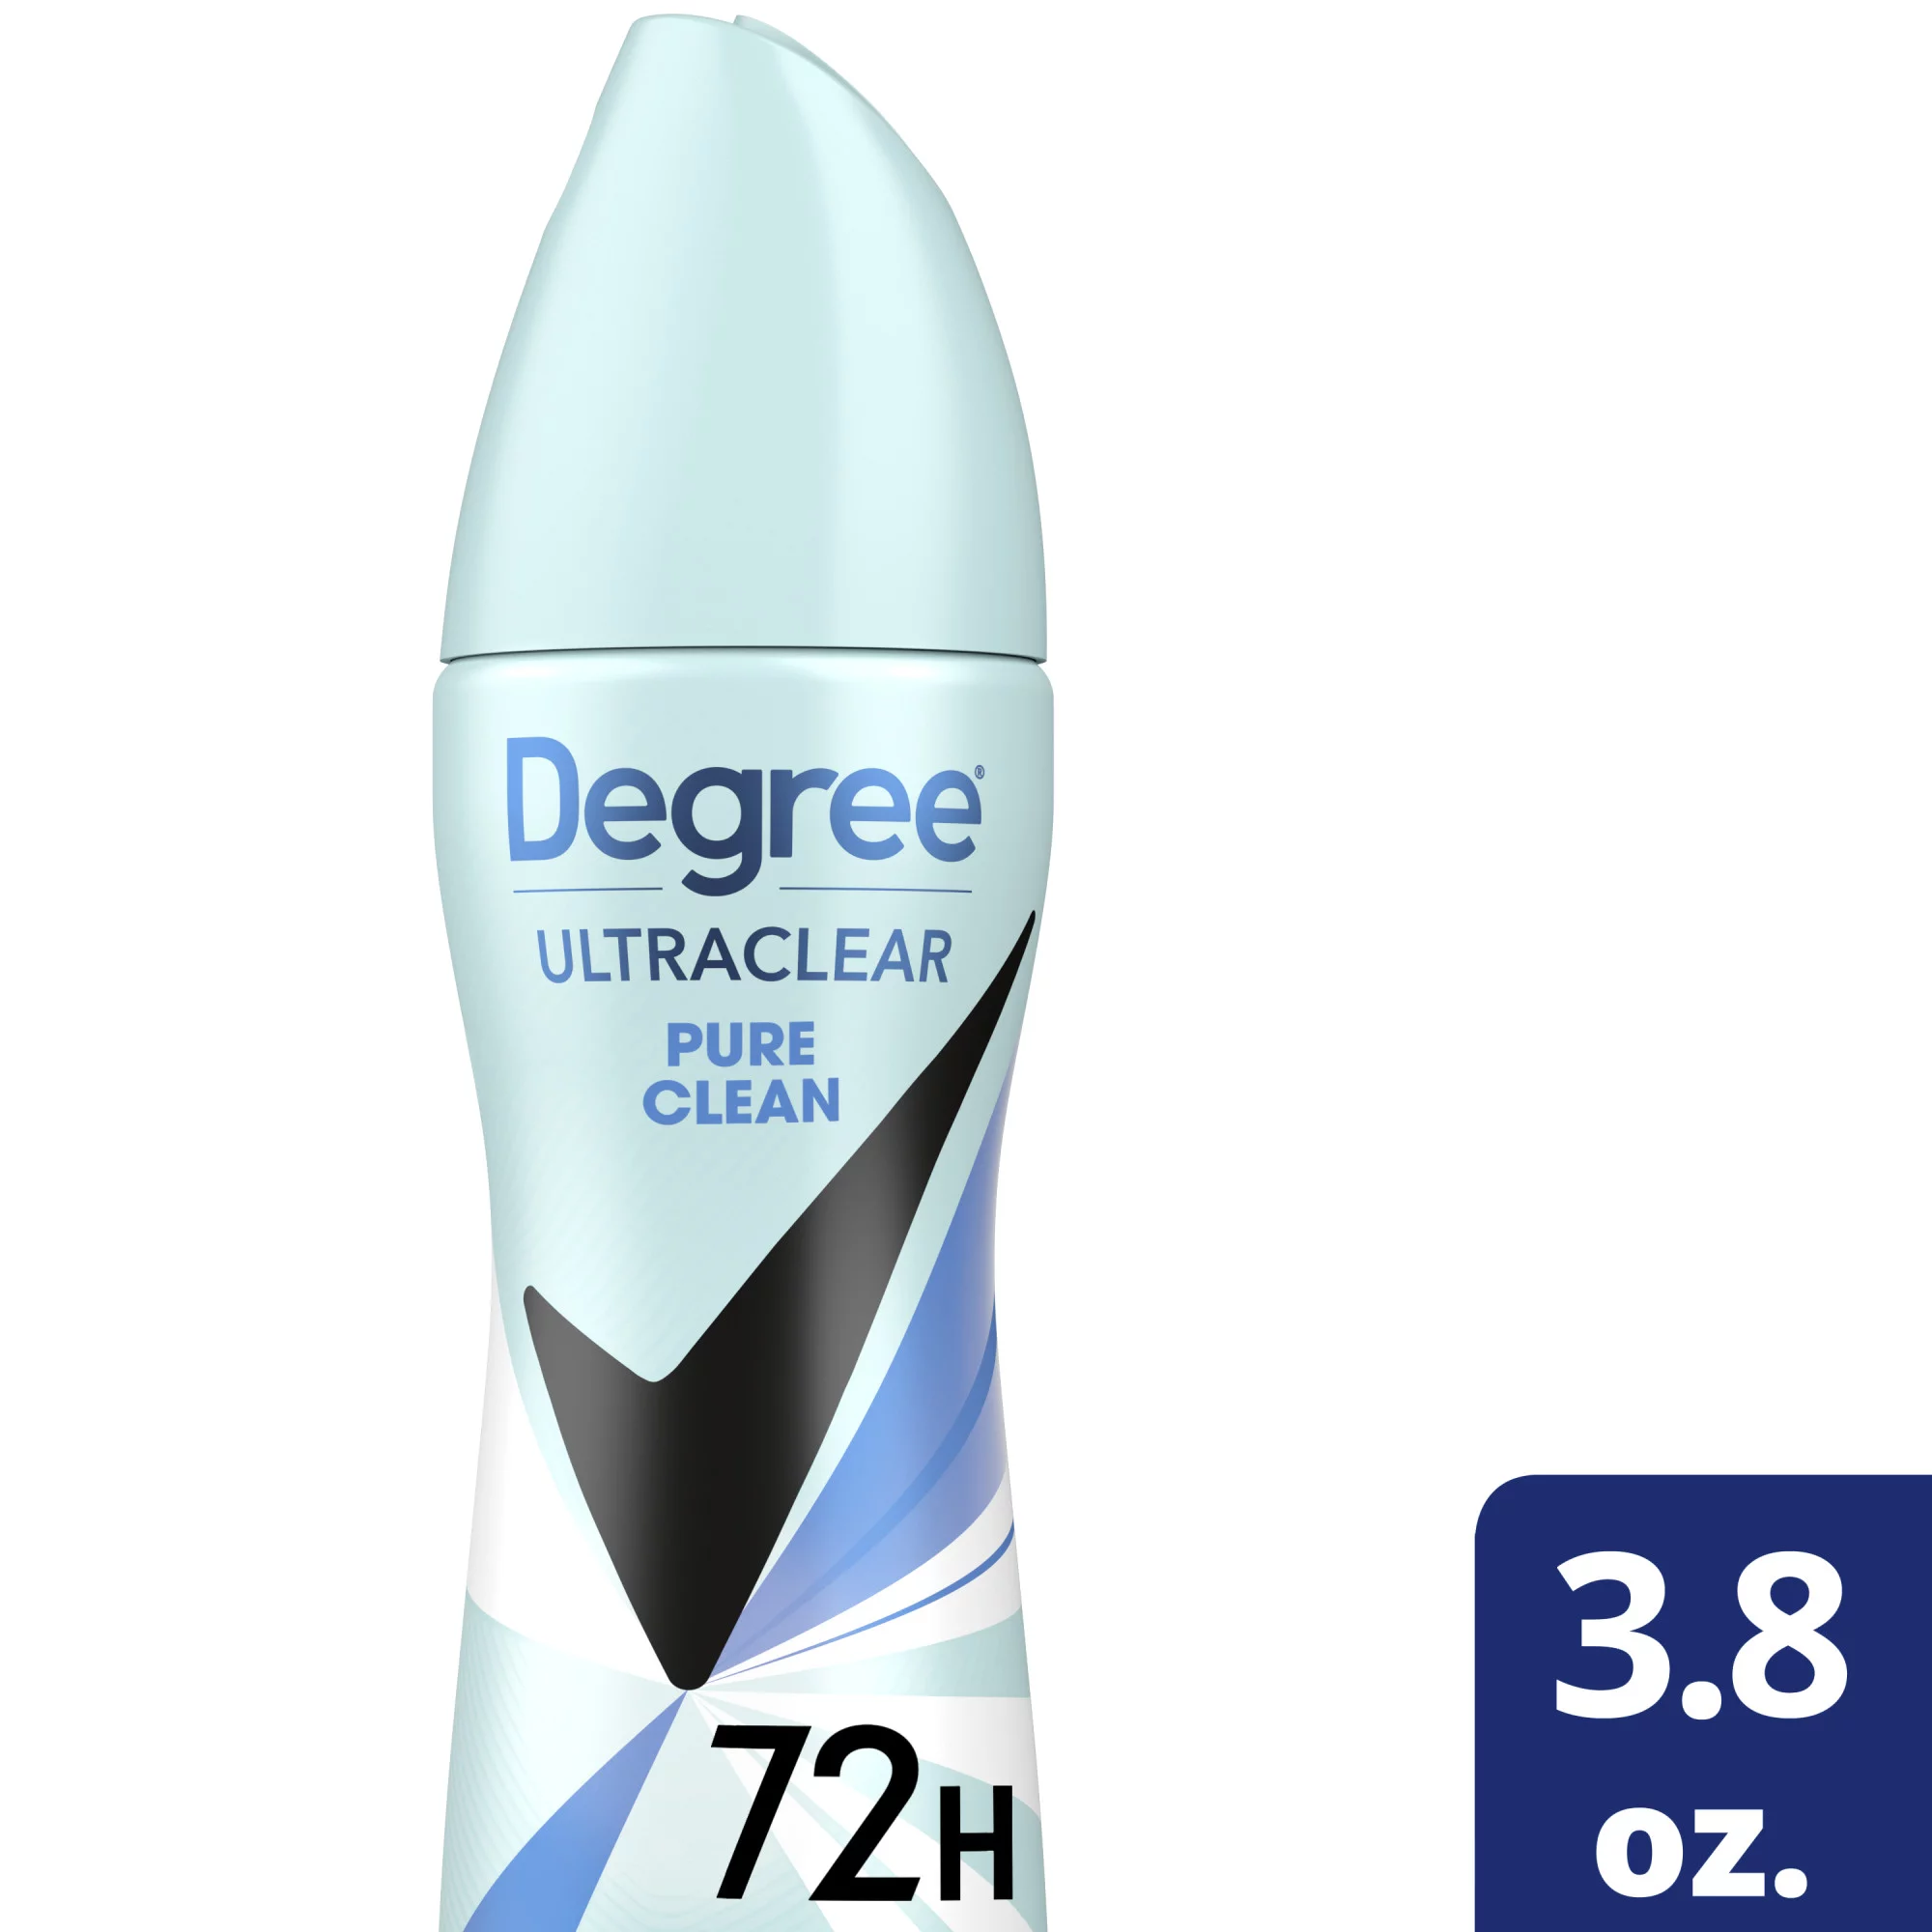 Degree UltraClear Black+White Antiperspirant Deodorant Dry Spray Pure Clean, 3.8 oz